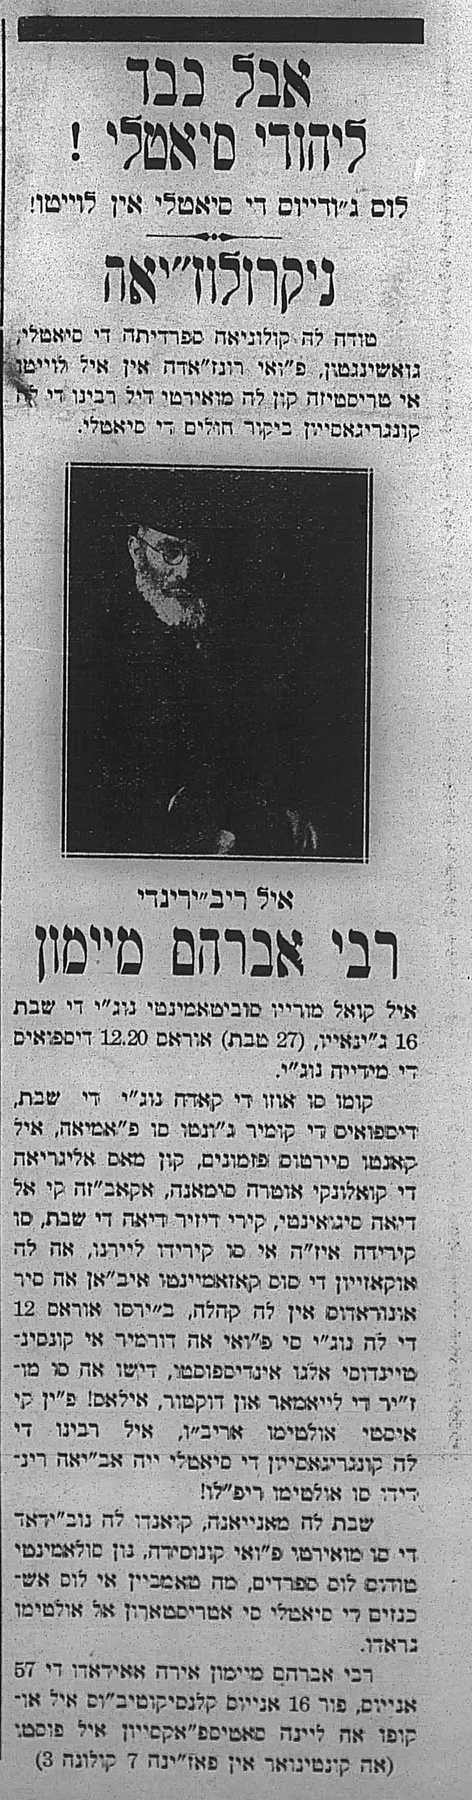 Rabbi Avraham Maimon obituary 0294.jpg